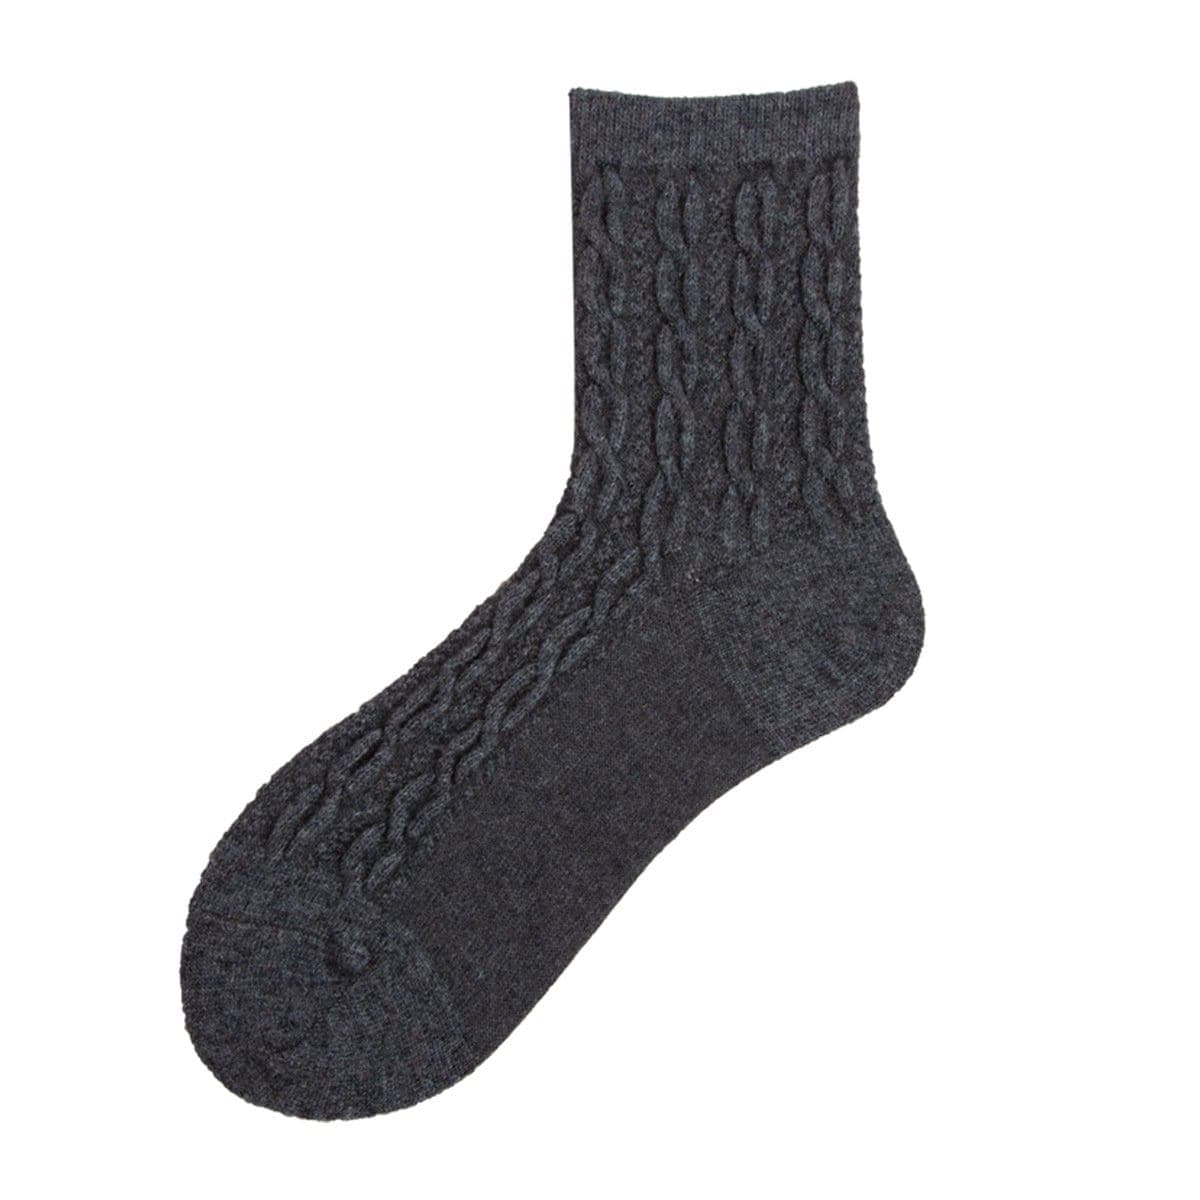 Twisted pattern design socks